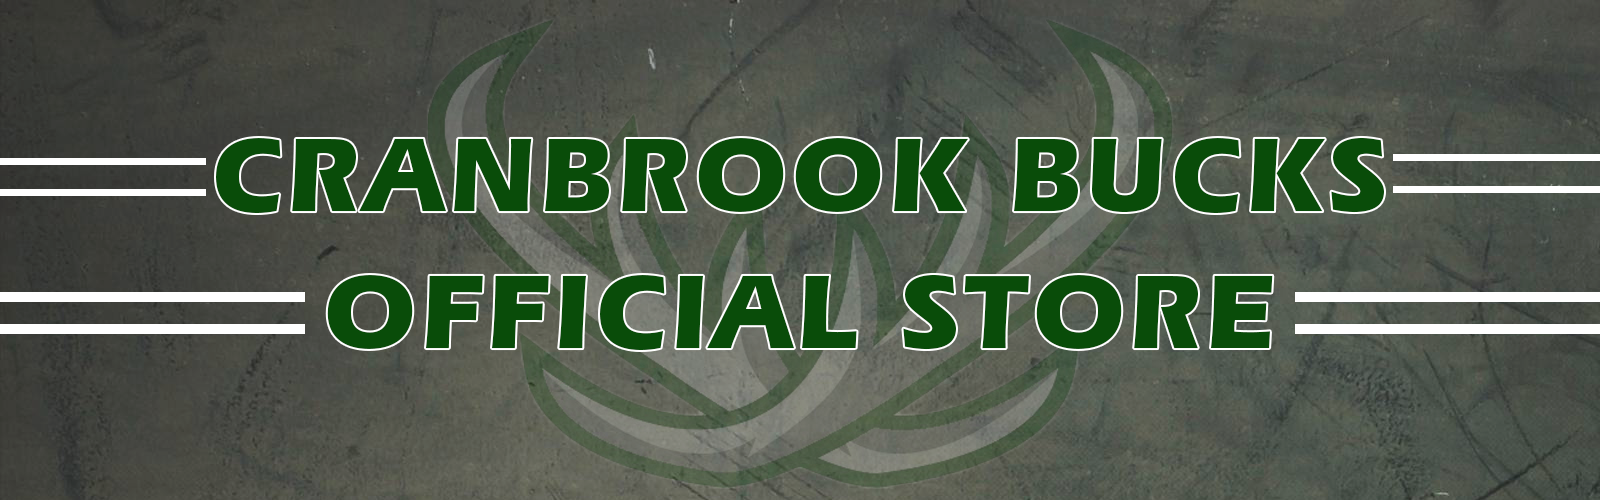 Cranbrook Bucks Official Store